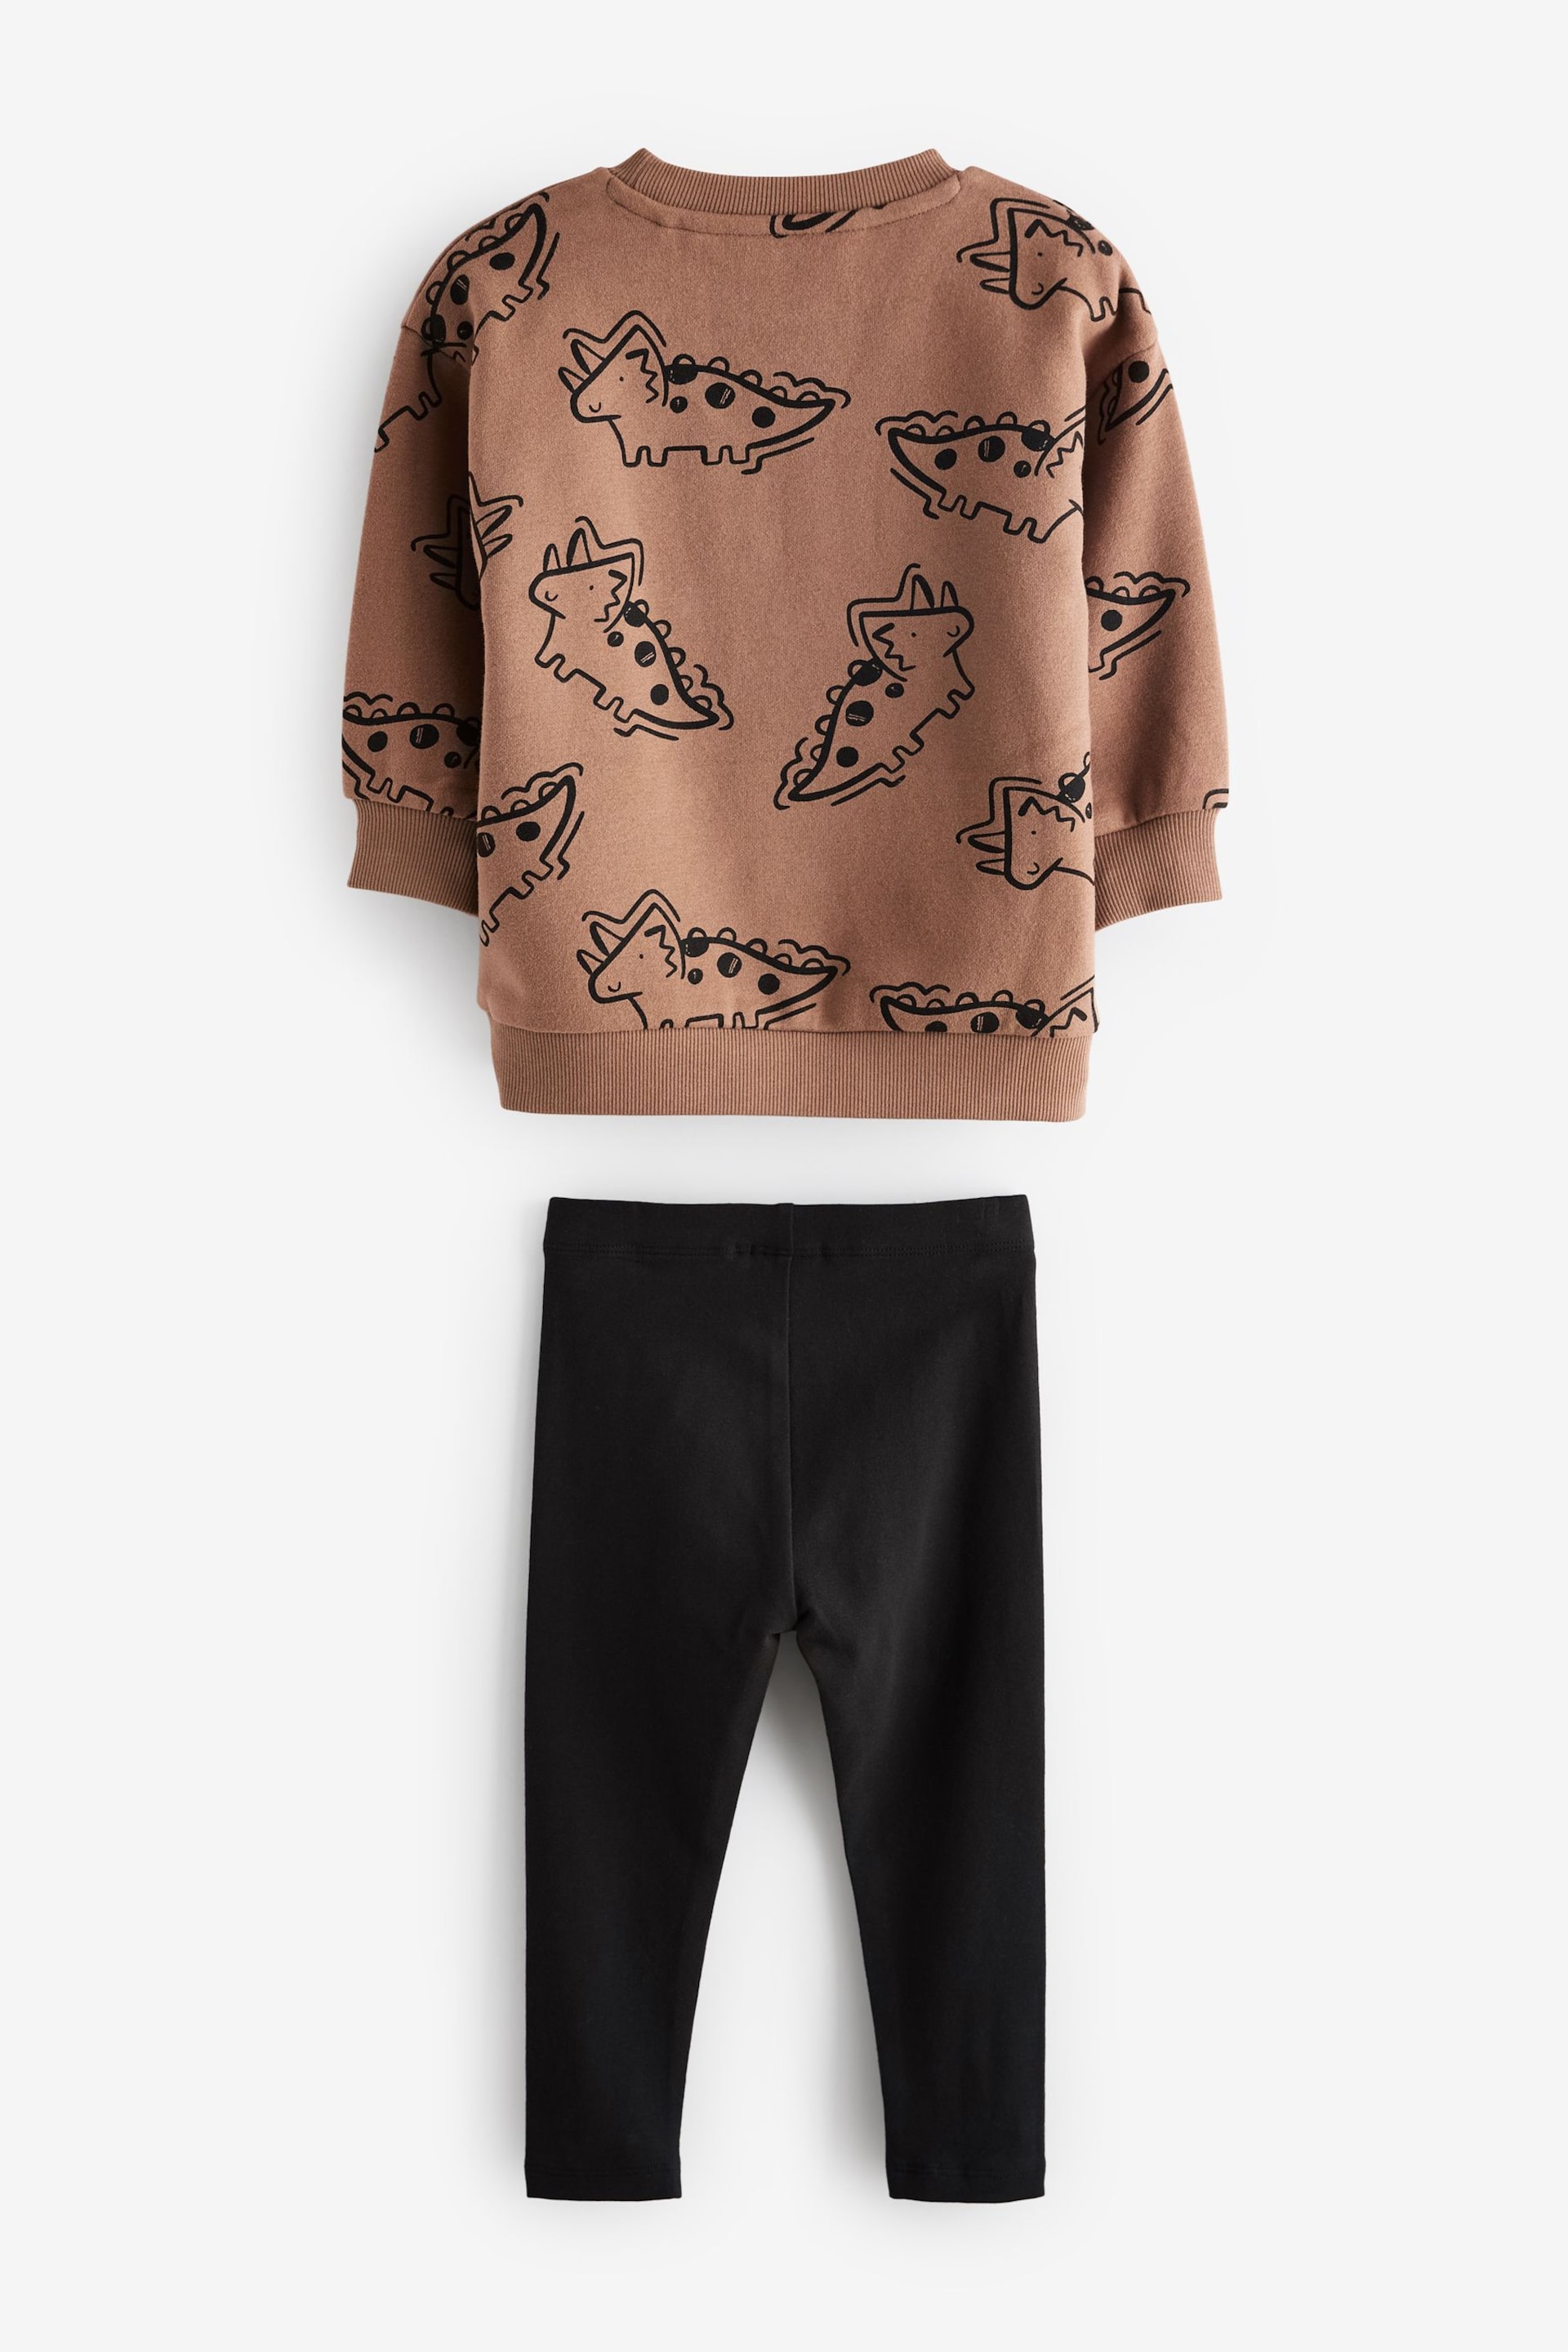 Tan Brown Dino Print Character Sweatshirt and Legging Set (3mths-7yrs) - Image 6 of 7